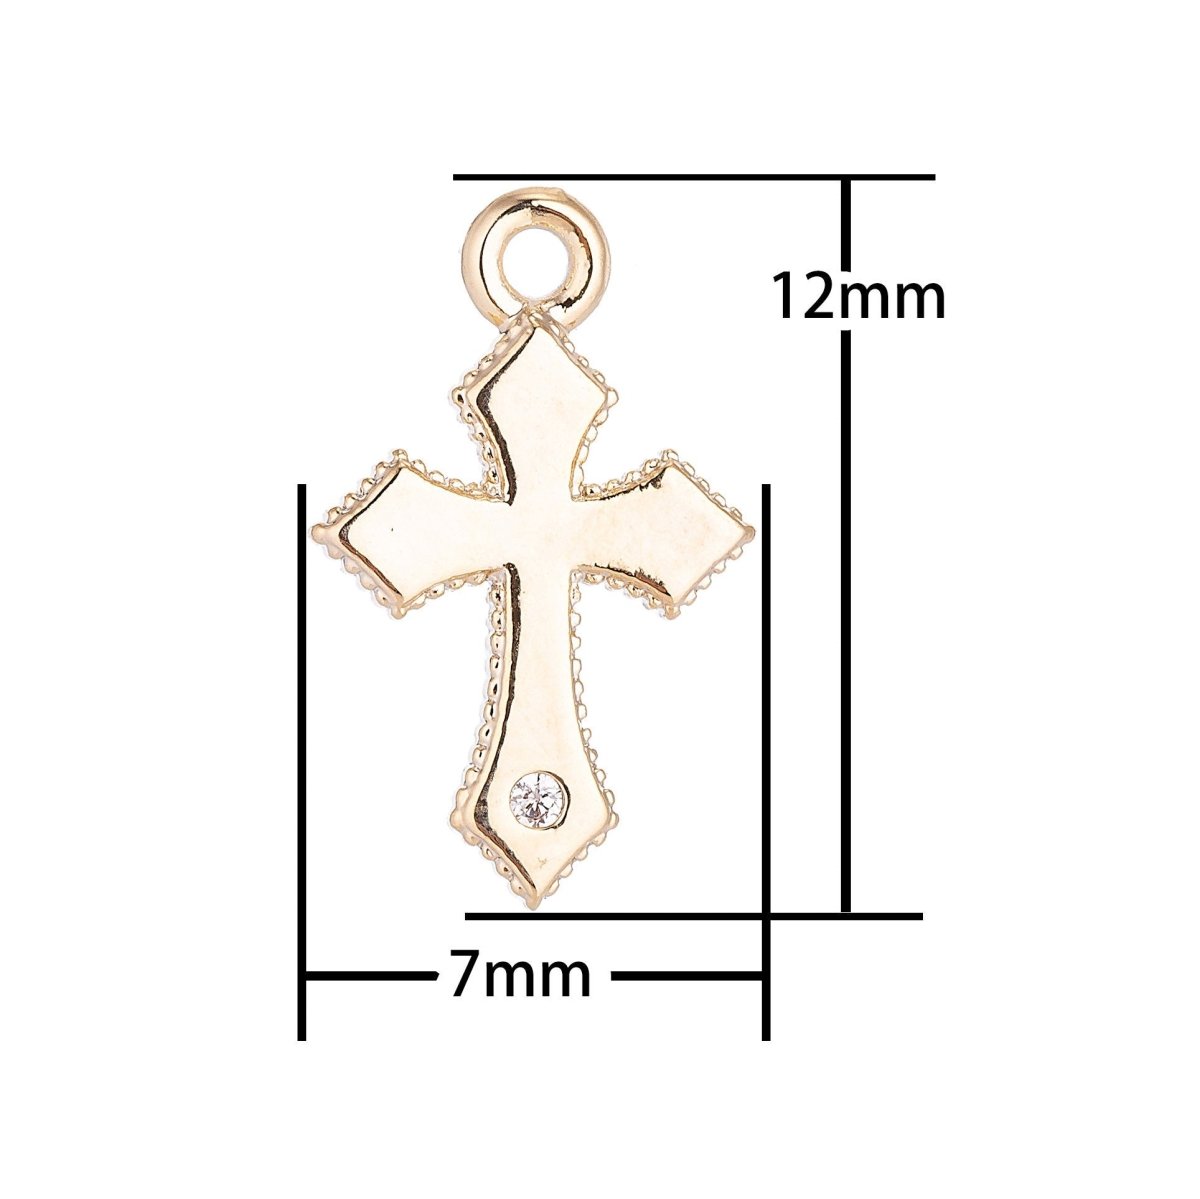 18k Gold Filled Tiny Dainty Small Cross Charm with Cubic Zircon CZ for Bracelet Necklace Jewelry Making C-115 - DLUXCA